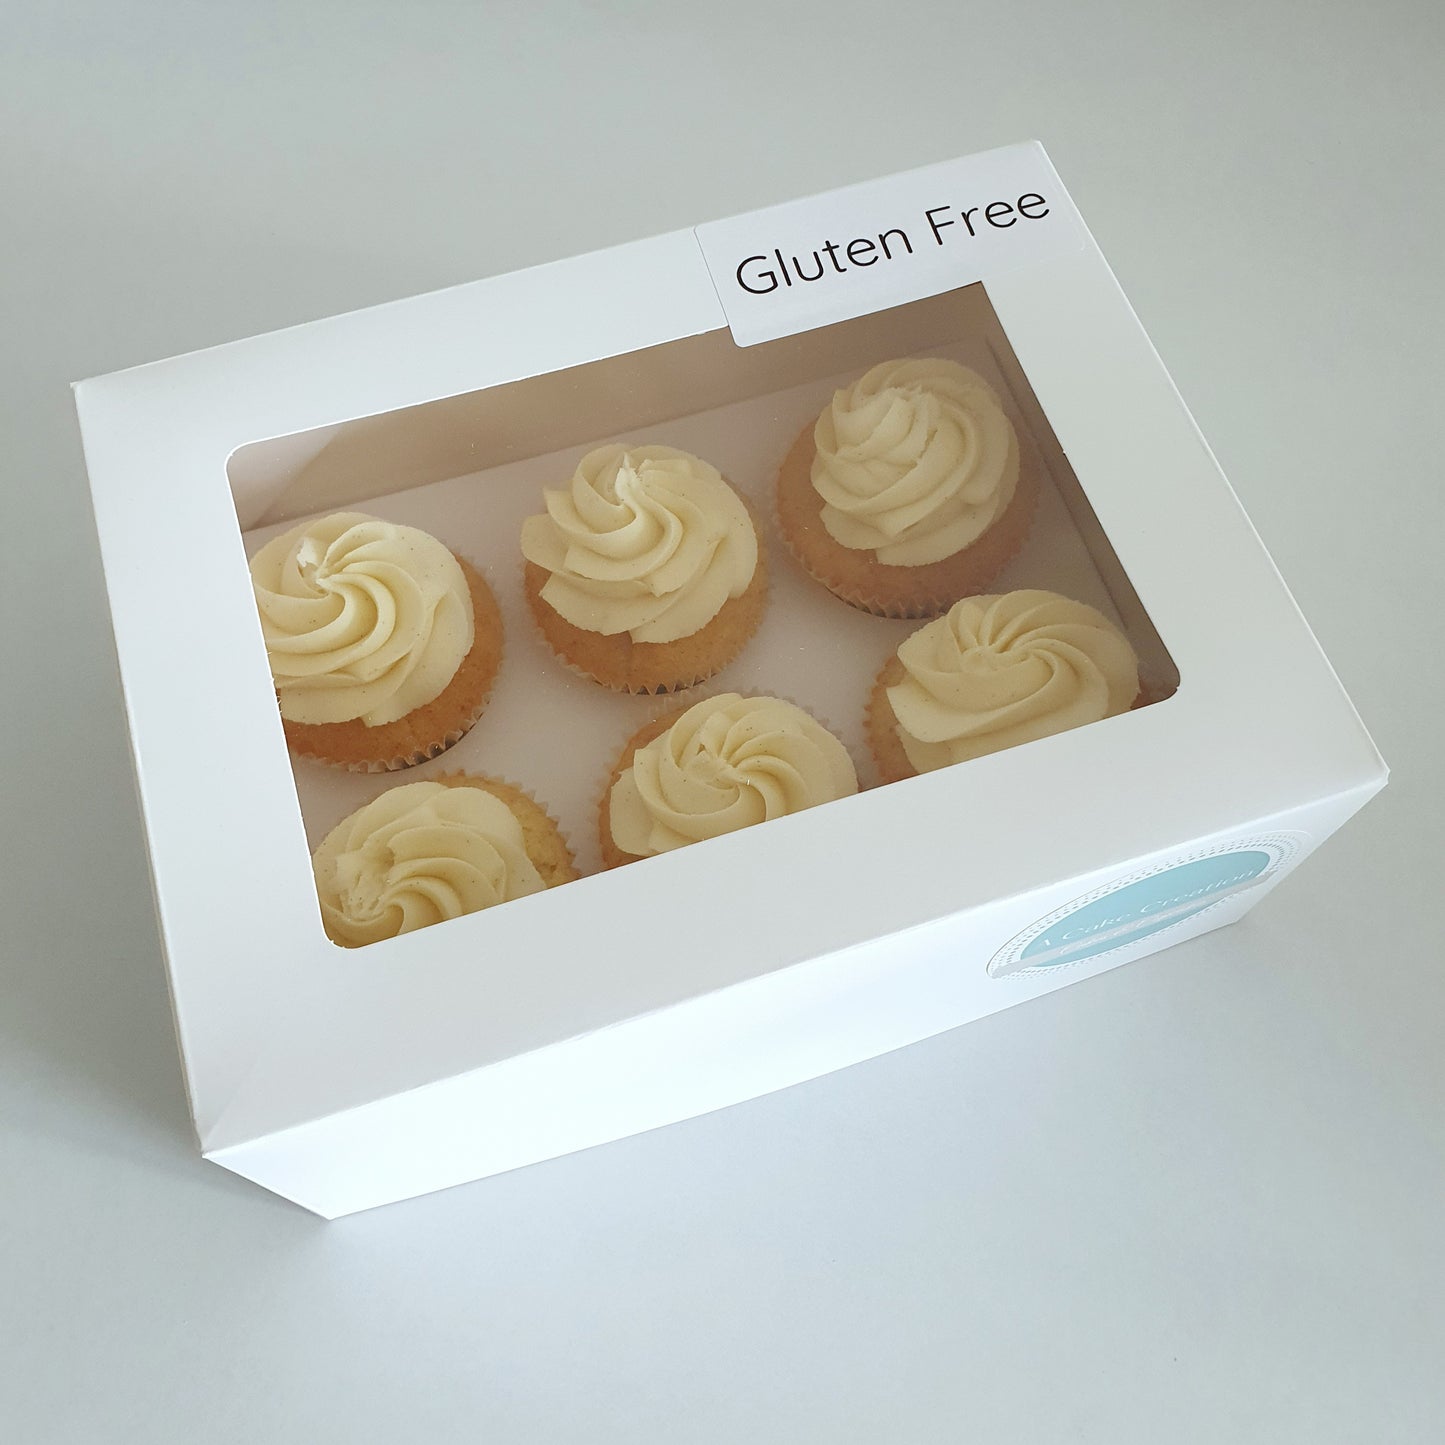 Gluten Free Cupcakes